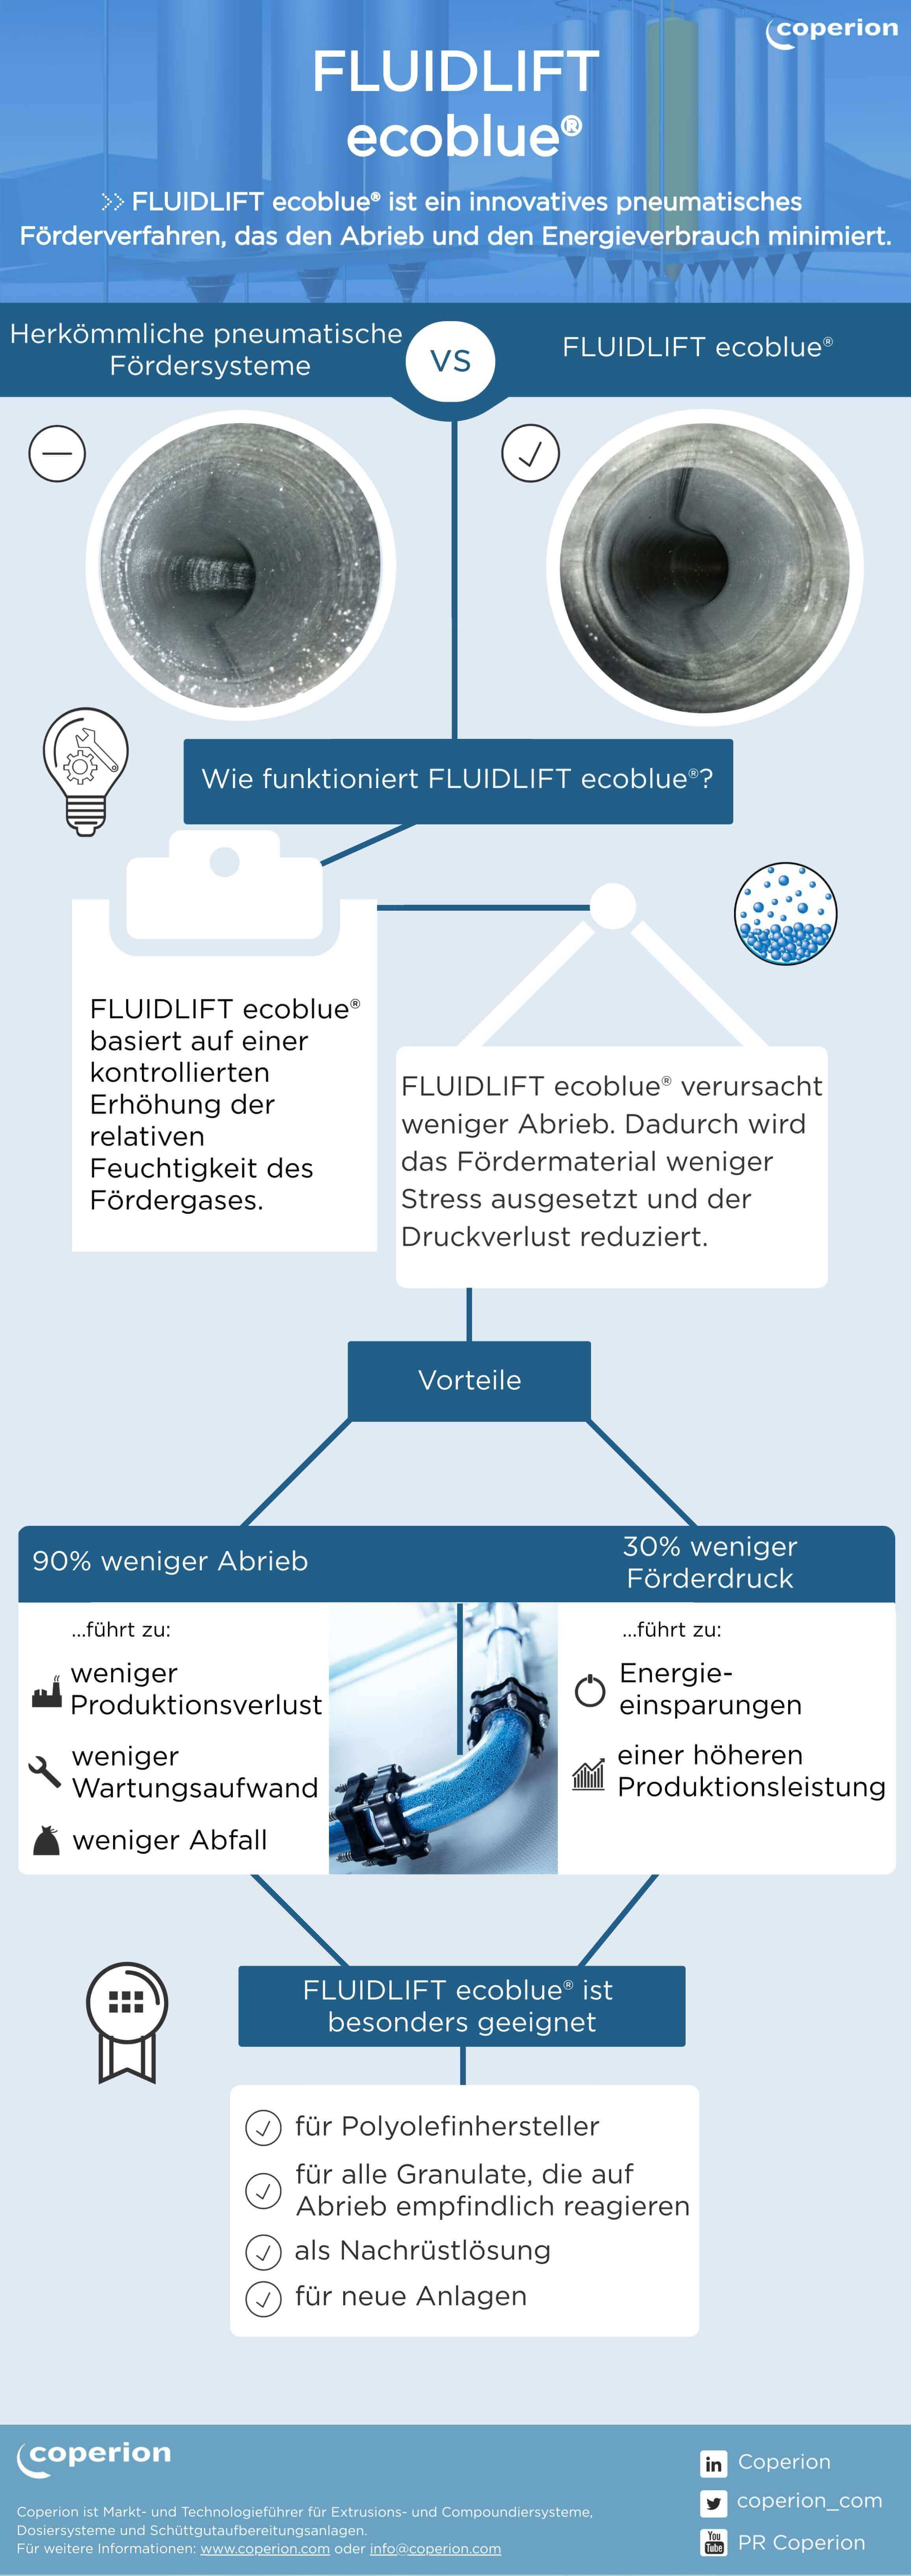 Coperion FLUIDLIFT ecoblue Infographic